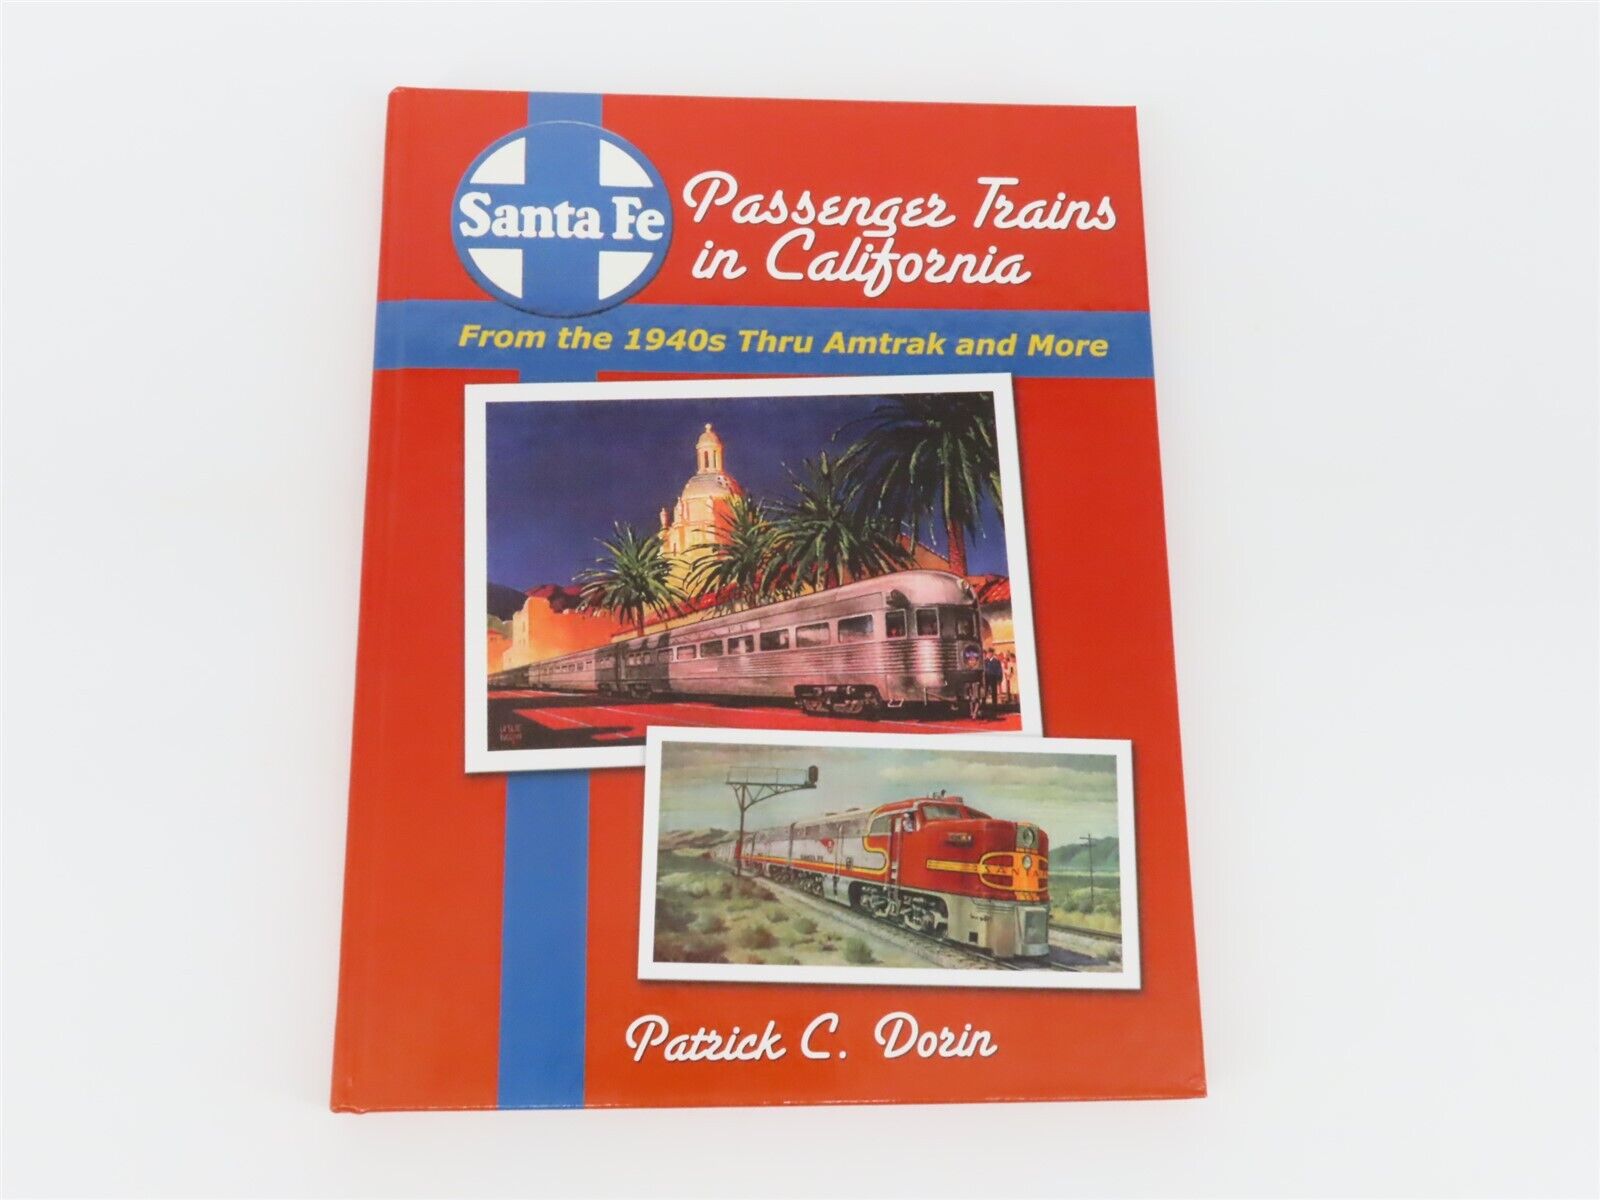 Santa Fe Passenger Trains in California by Patrick C. Dorin ©2006 HC Book